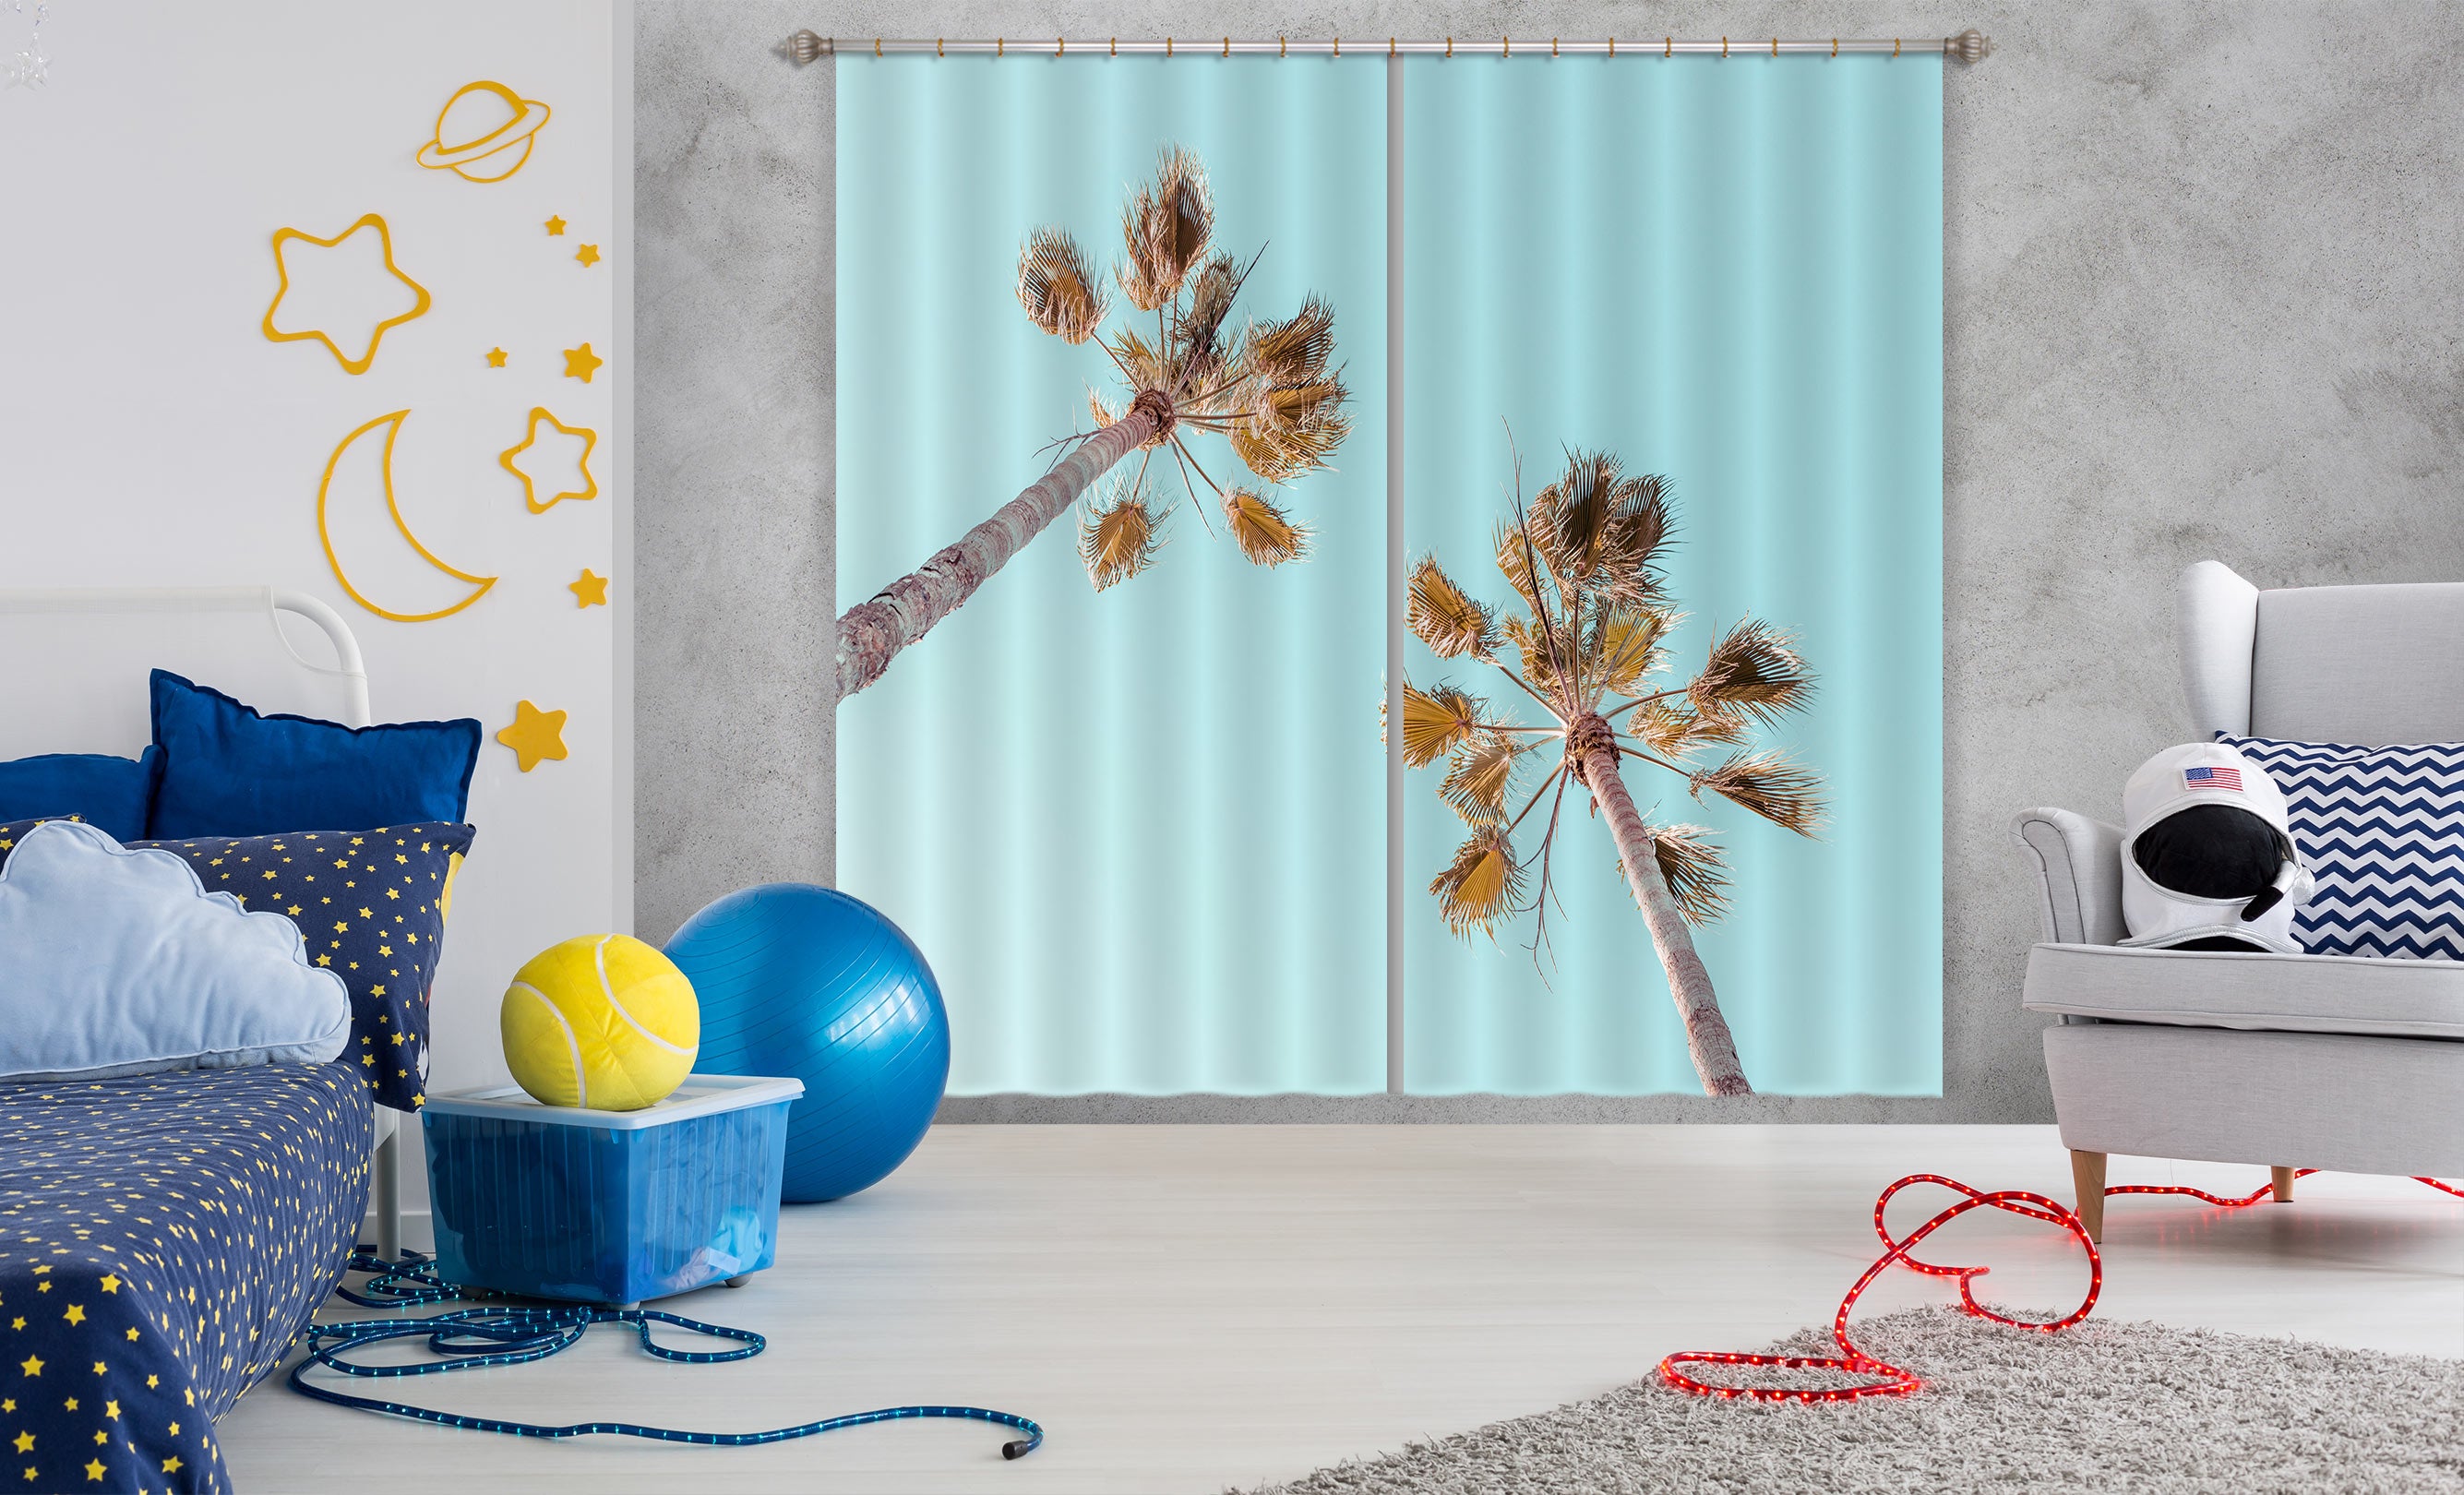 3D Sky Coconut Tree 6550 Assaf Frank Curtain Curtains Drapes